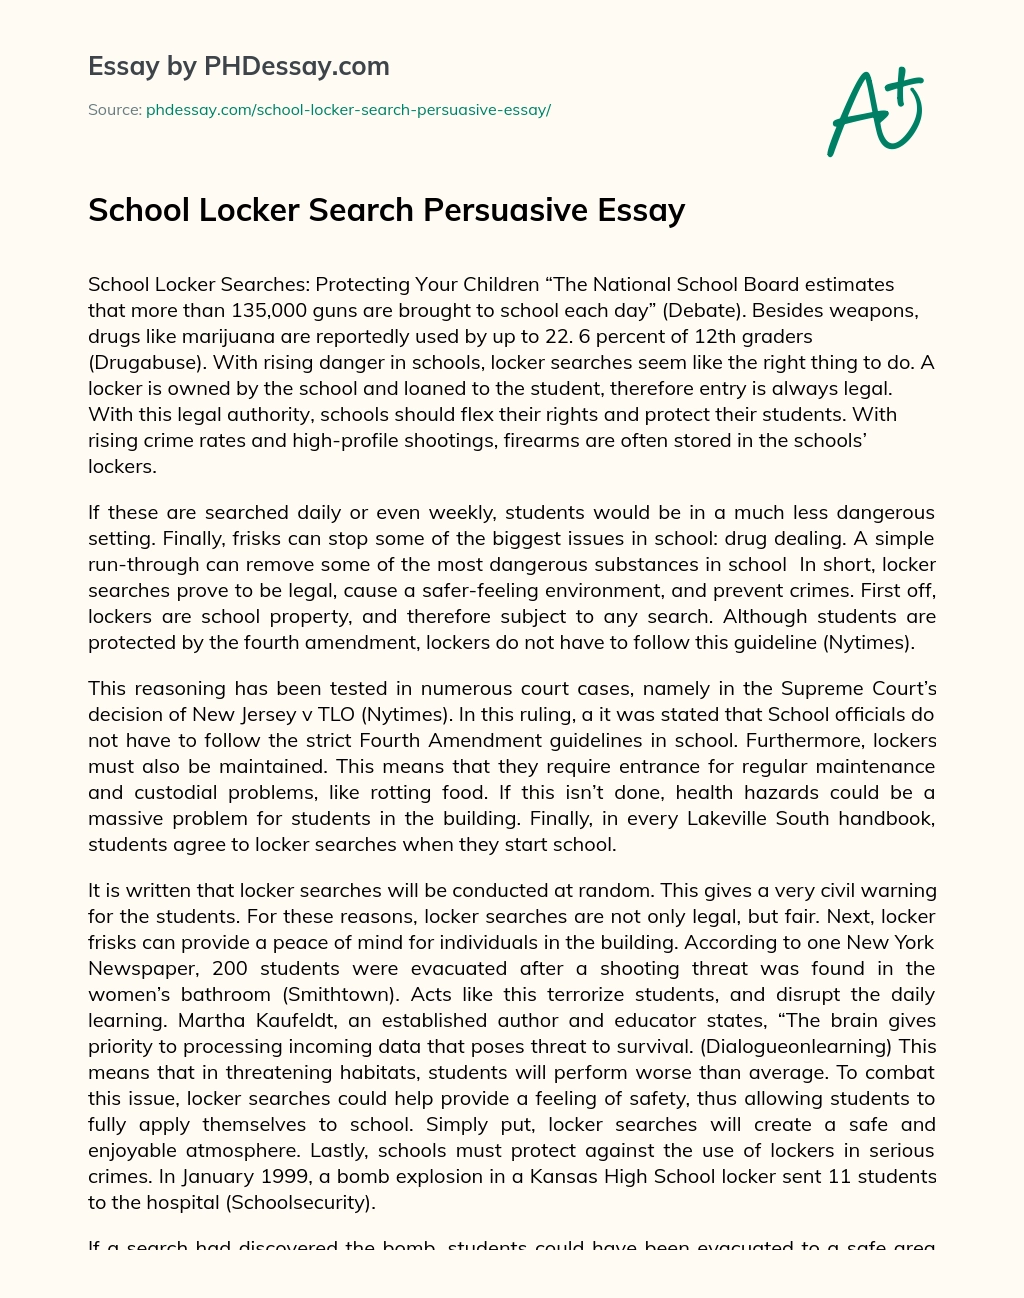 School Locker Search Persuasive Essay essay